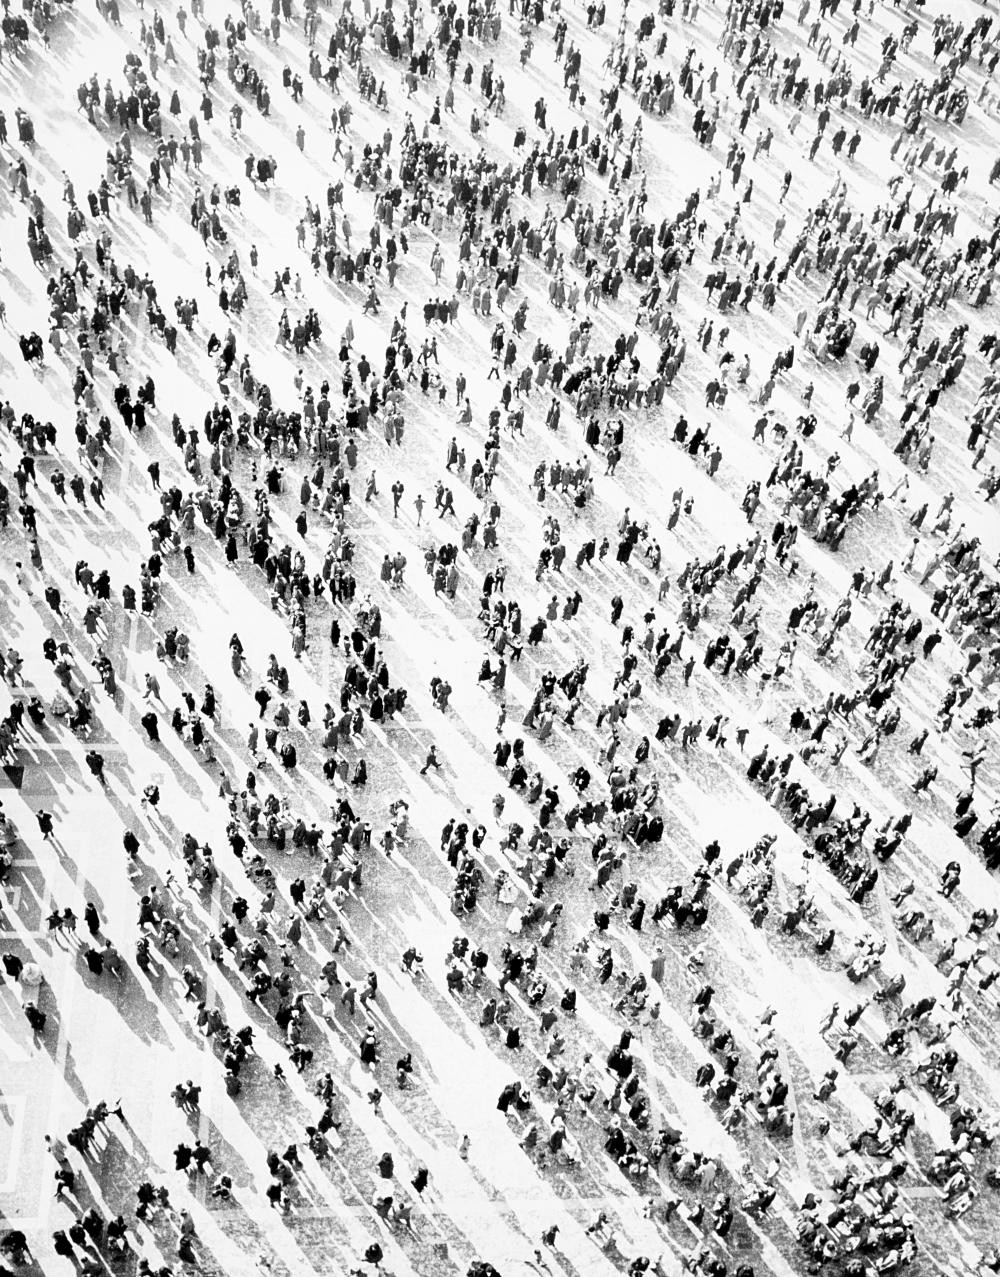 Люди на площади, ок. 1950. Фотограф Марио Де Бьязи